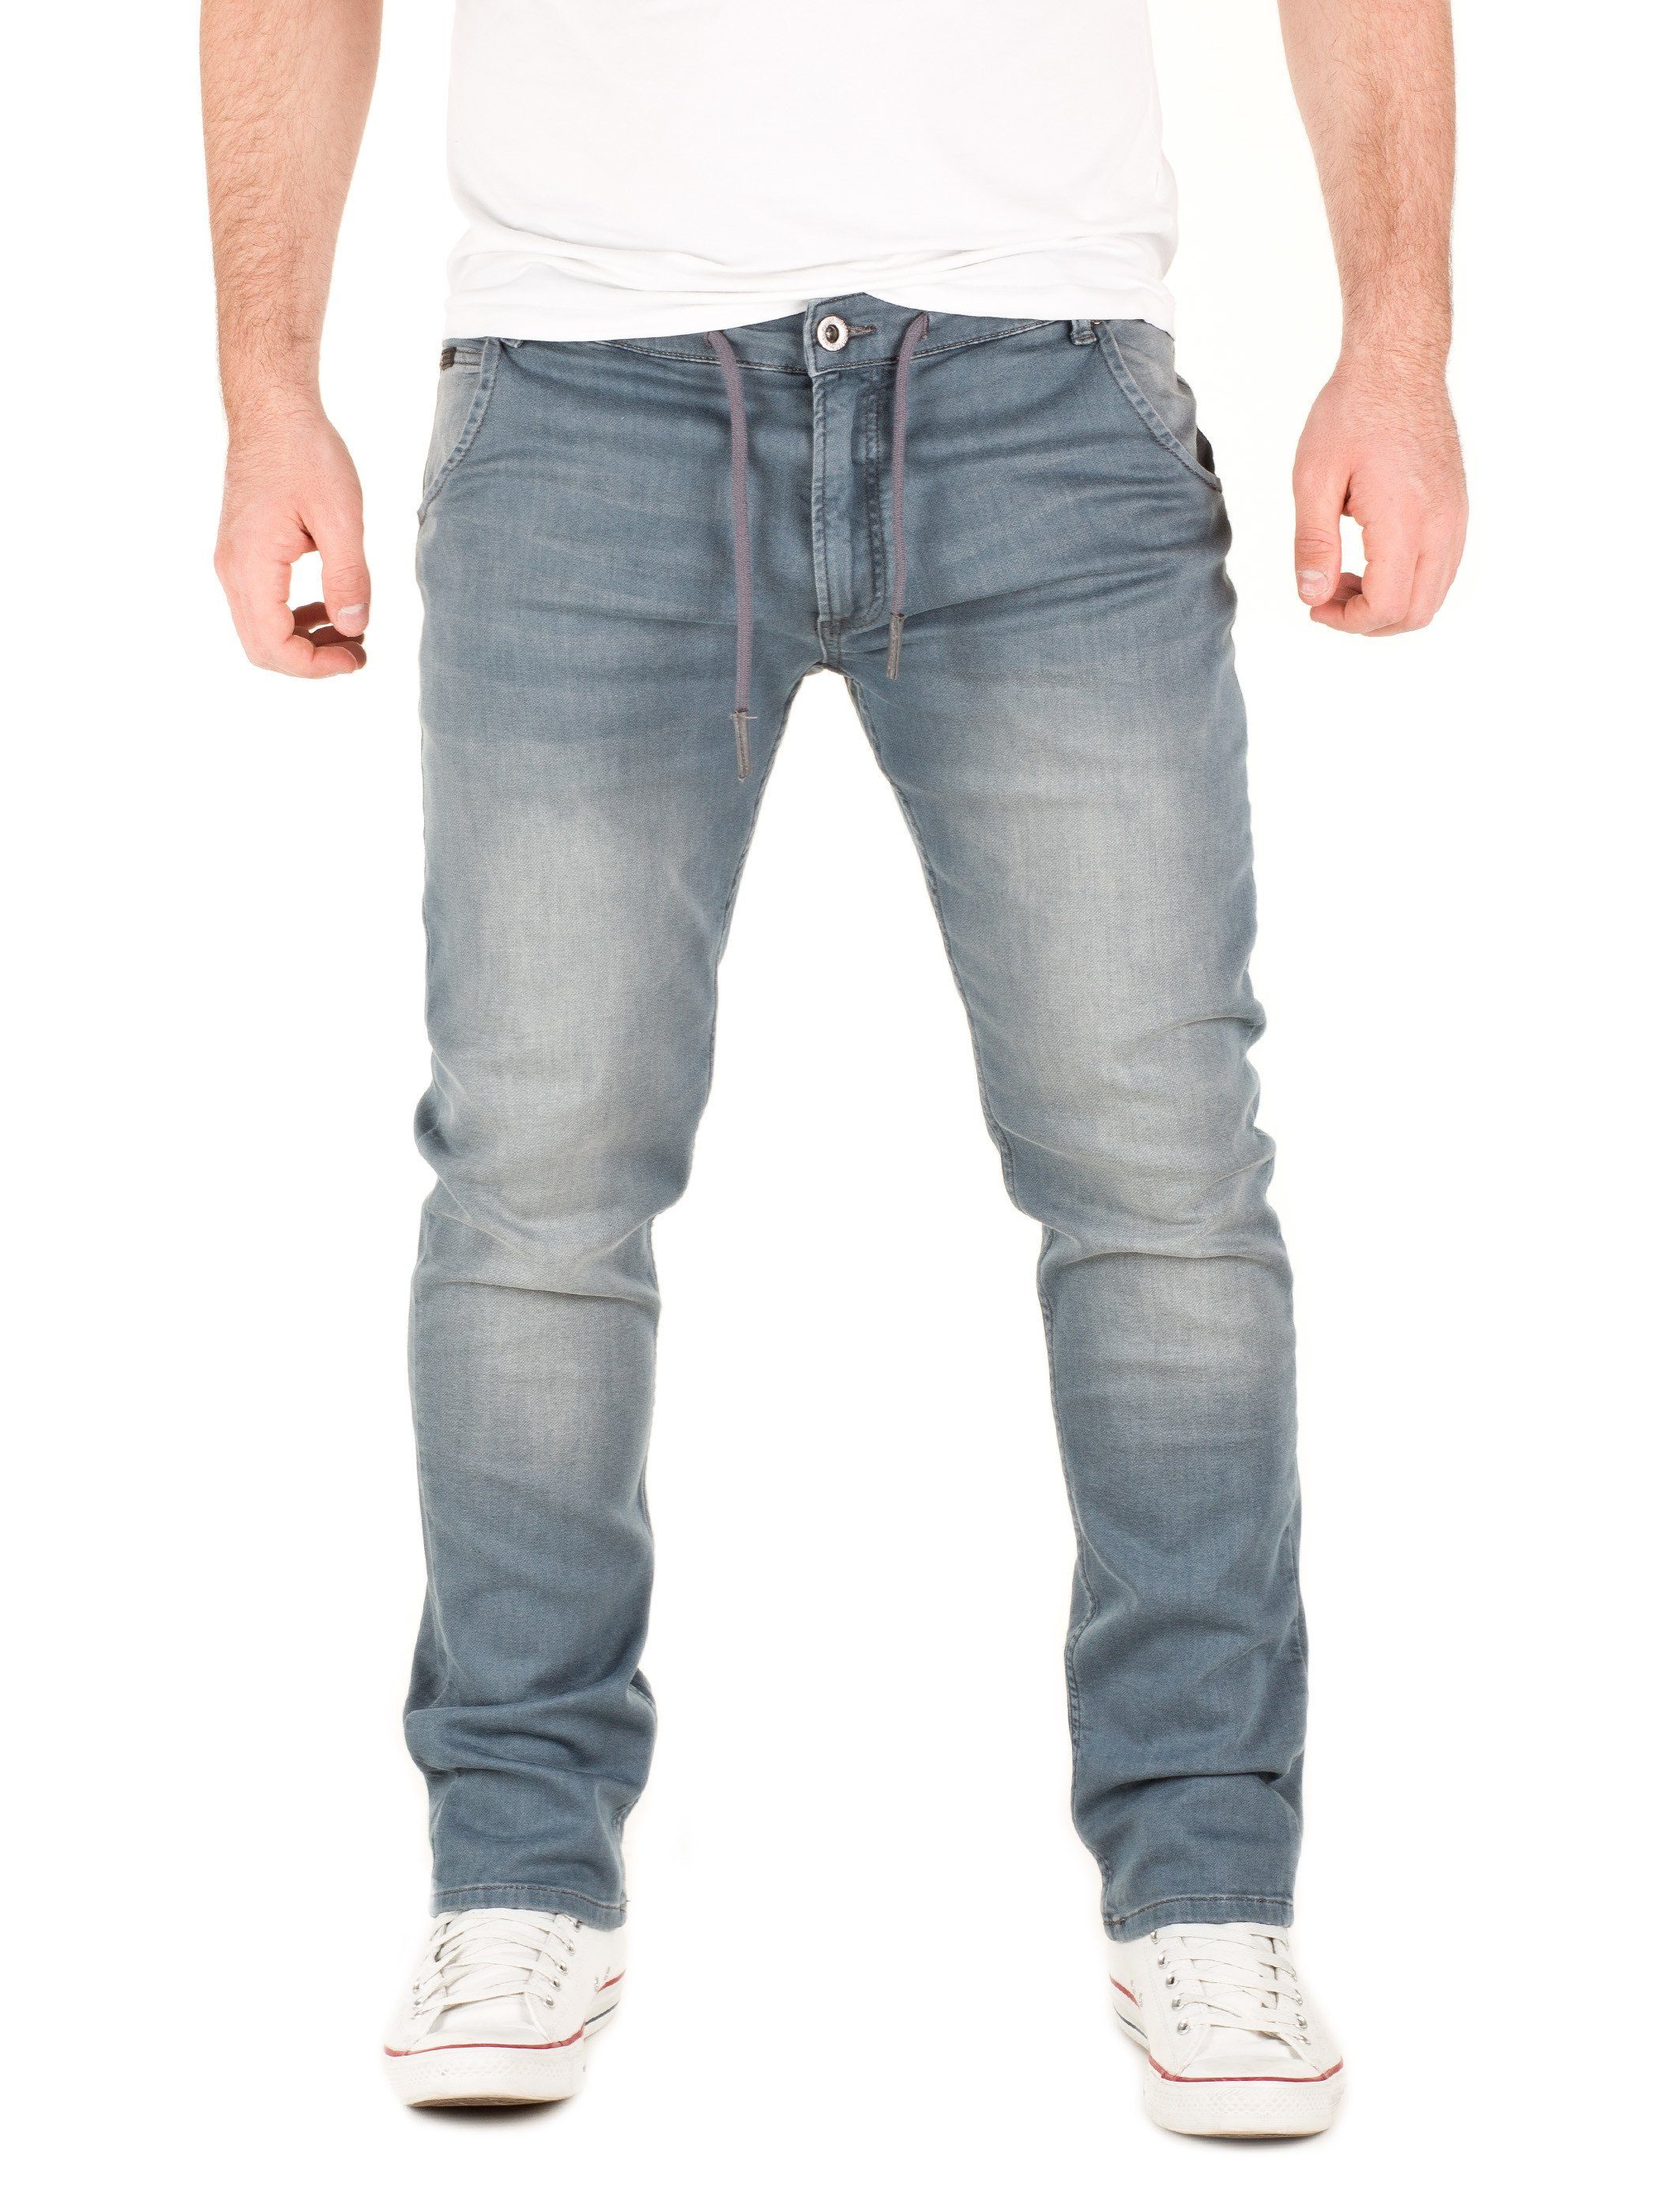 WOTEGA Slim-fit-Jeans Herren Jogginghose in Jeans-Look Joshua Stretch Hose in Jogging Jeans Sweathosen Denim Grau (turbulence grey 4215)